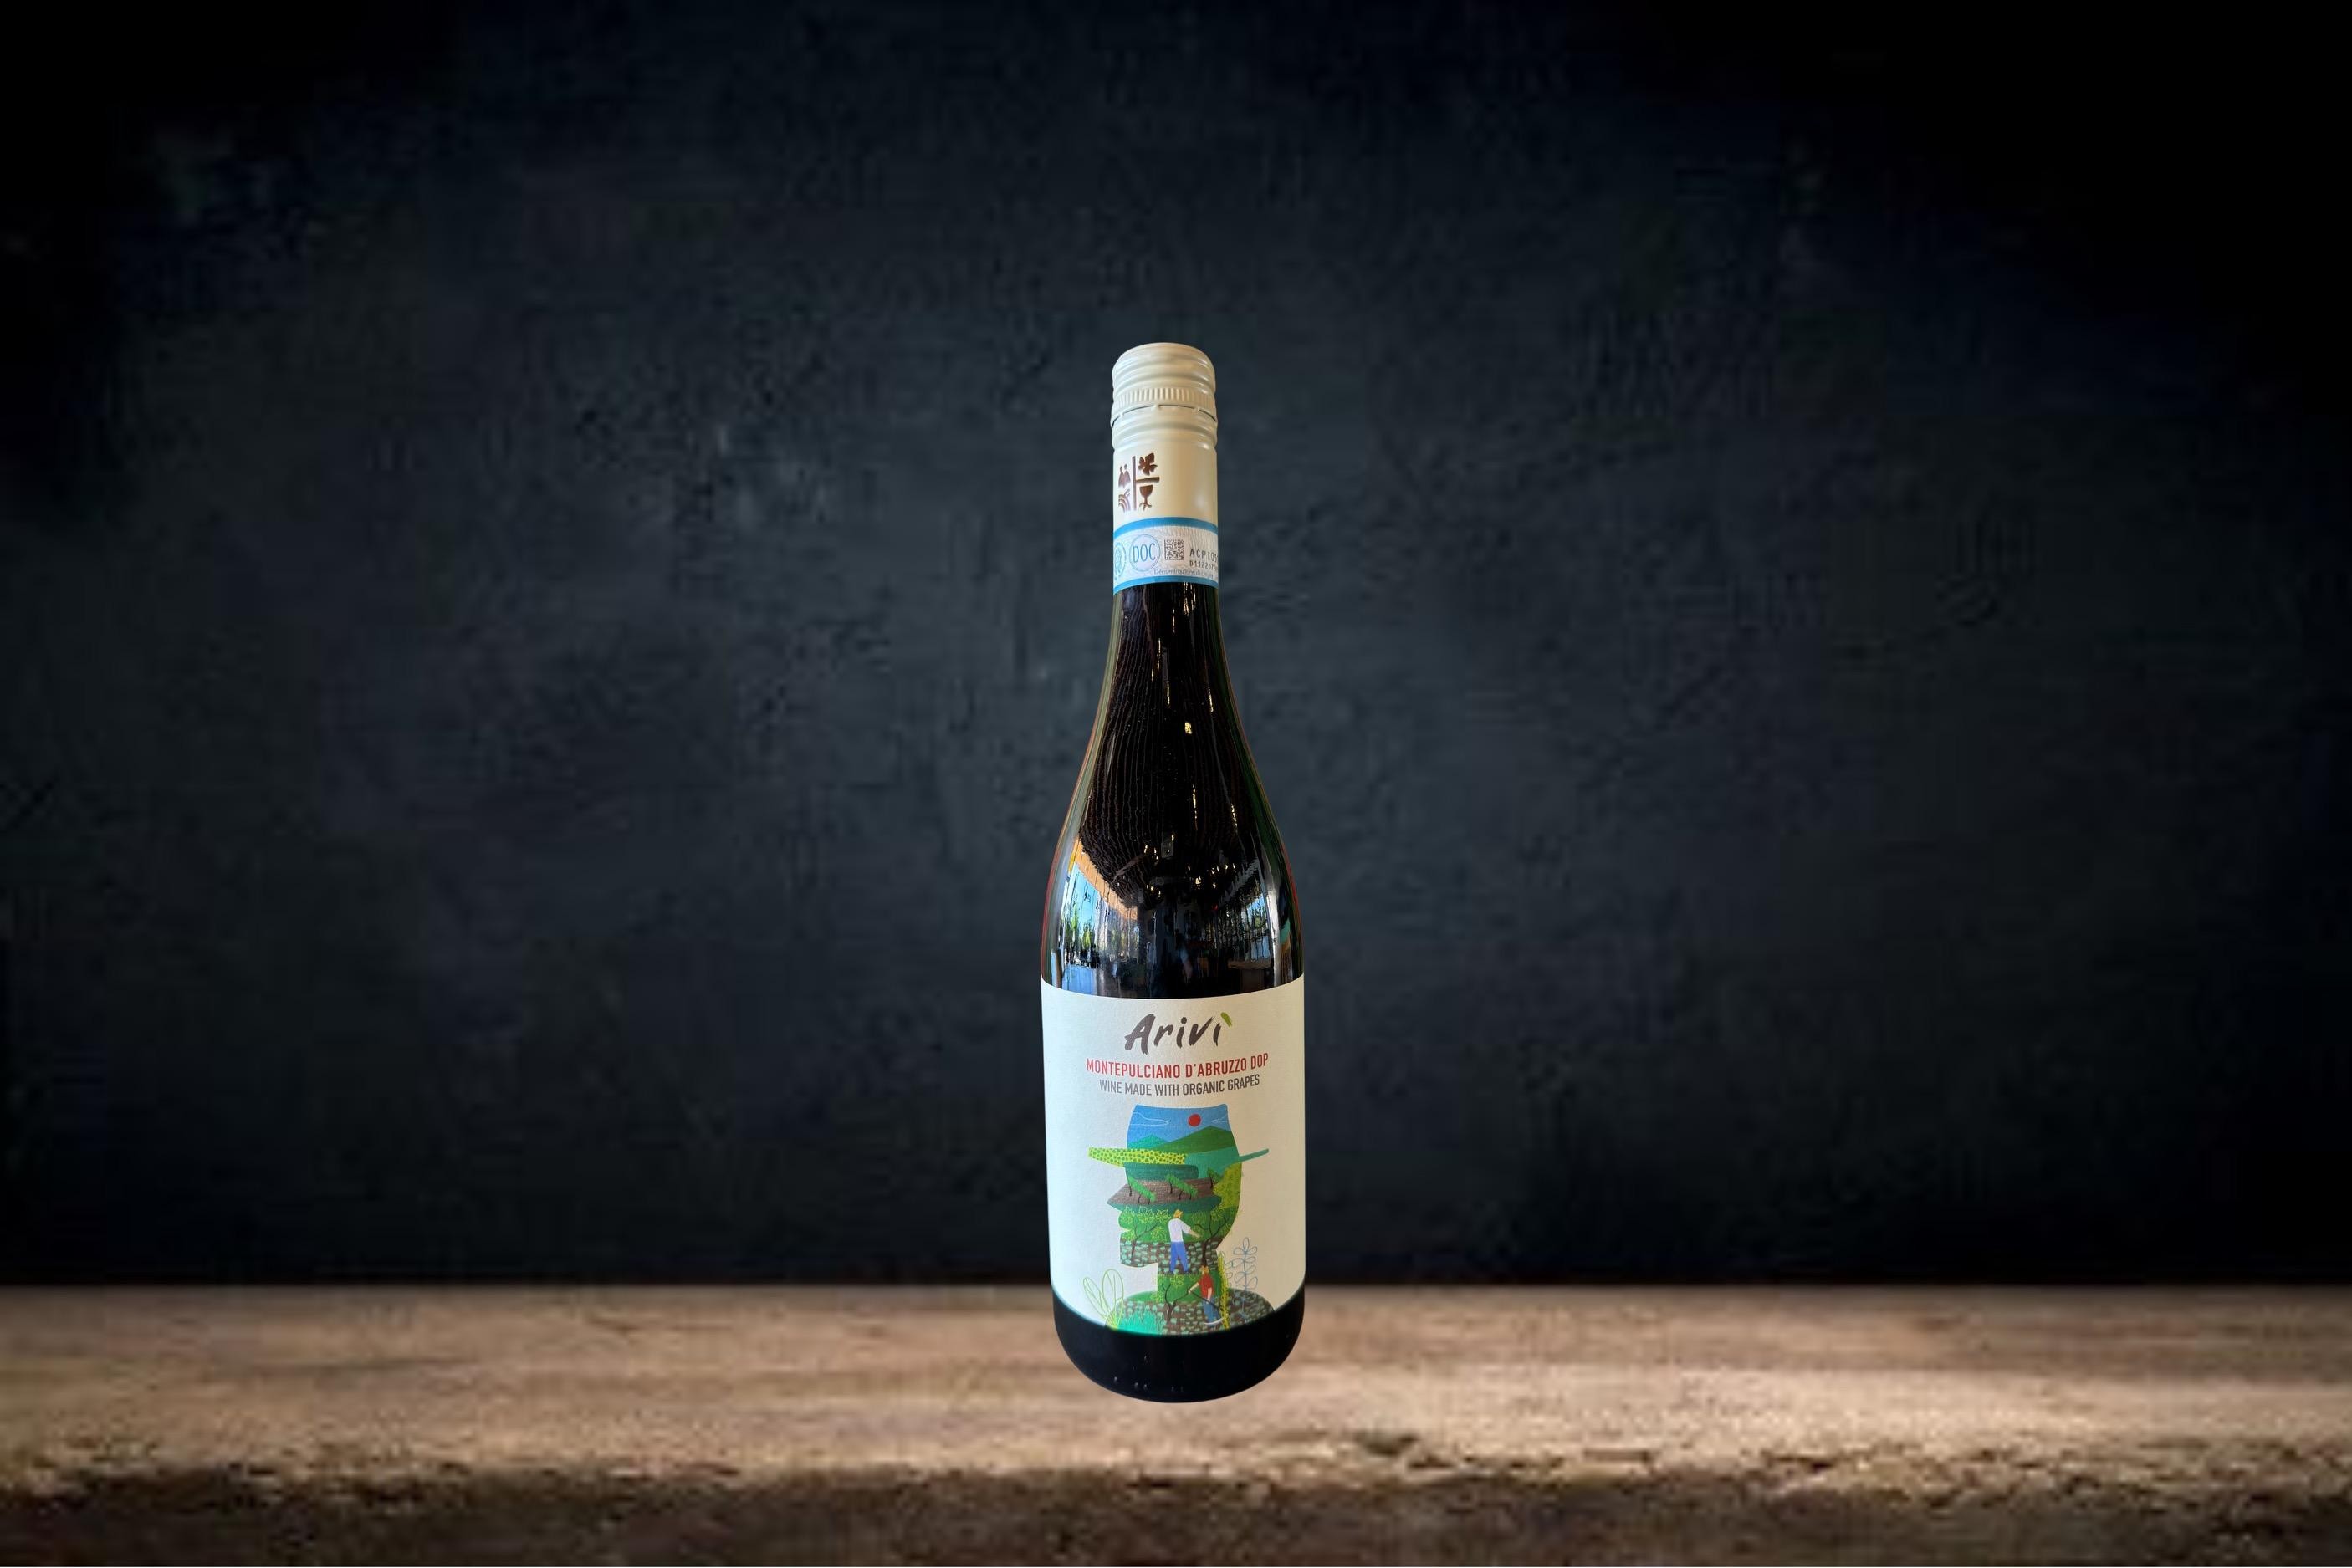 Arivi Montepulciano 2021 13% Alchohol (Made with Organic Grapes)